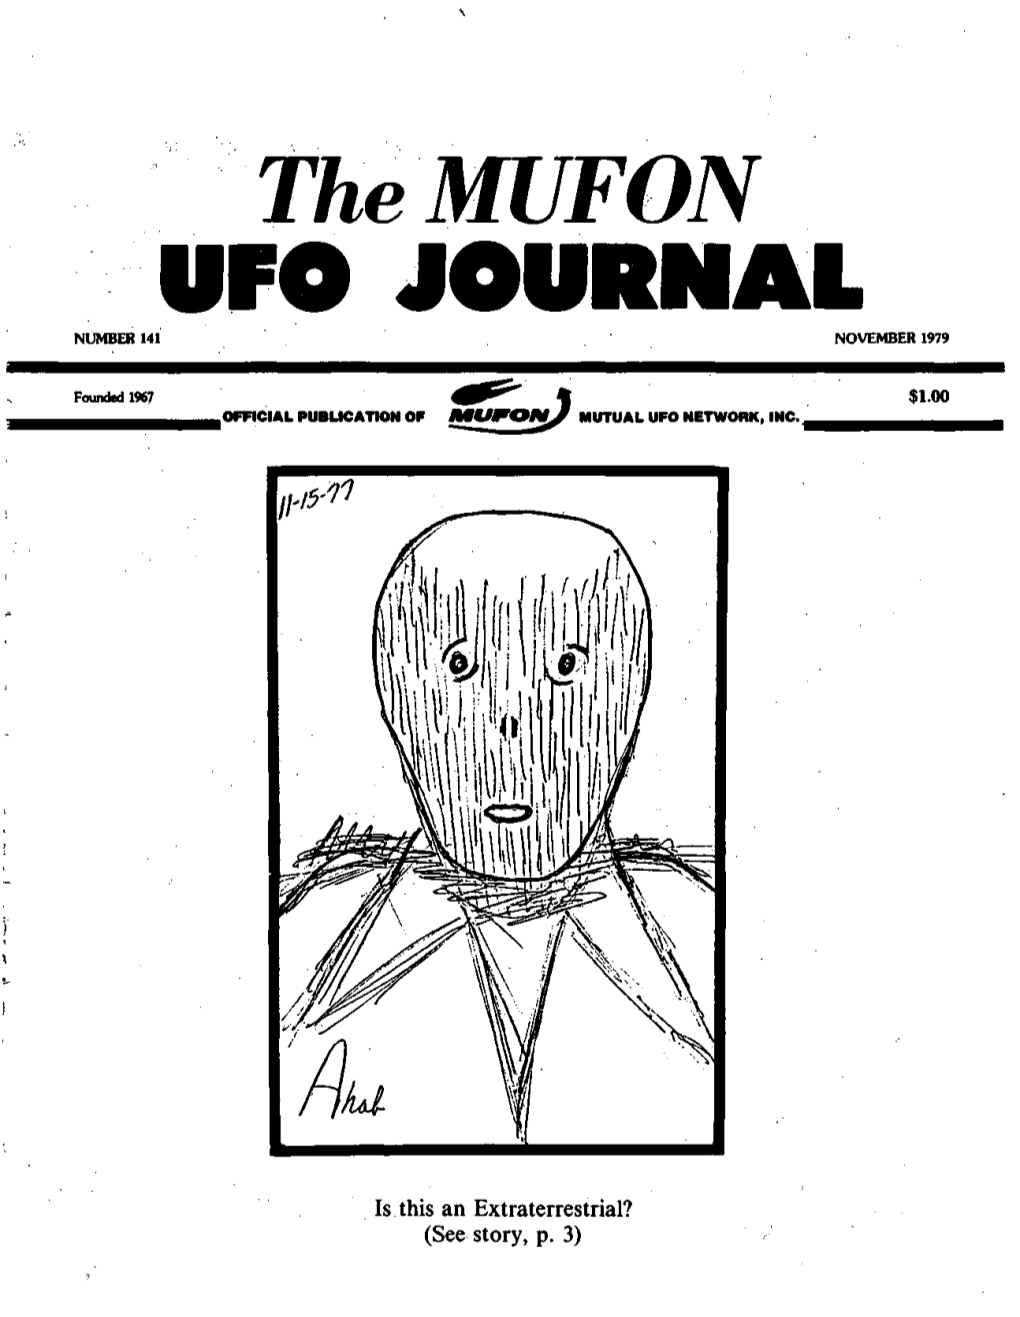 Themufon UFO JOURNAL NUMBER 141 NOVEMBER 1979